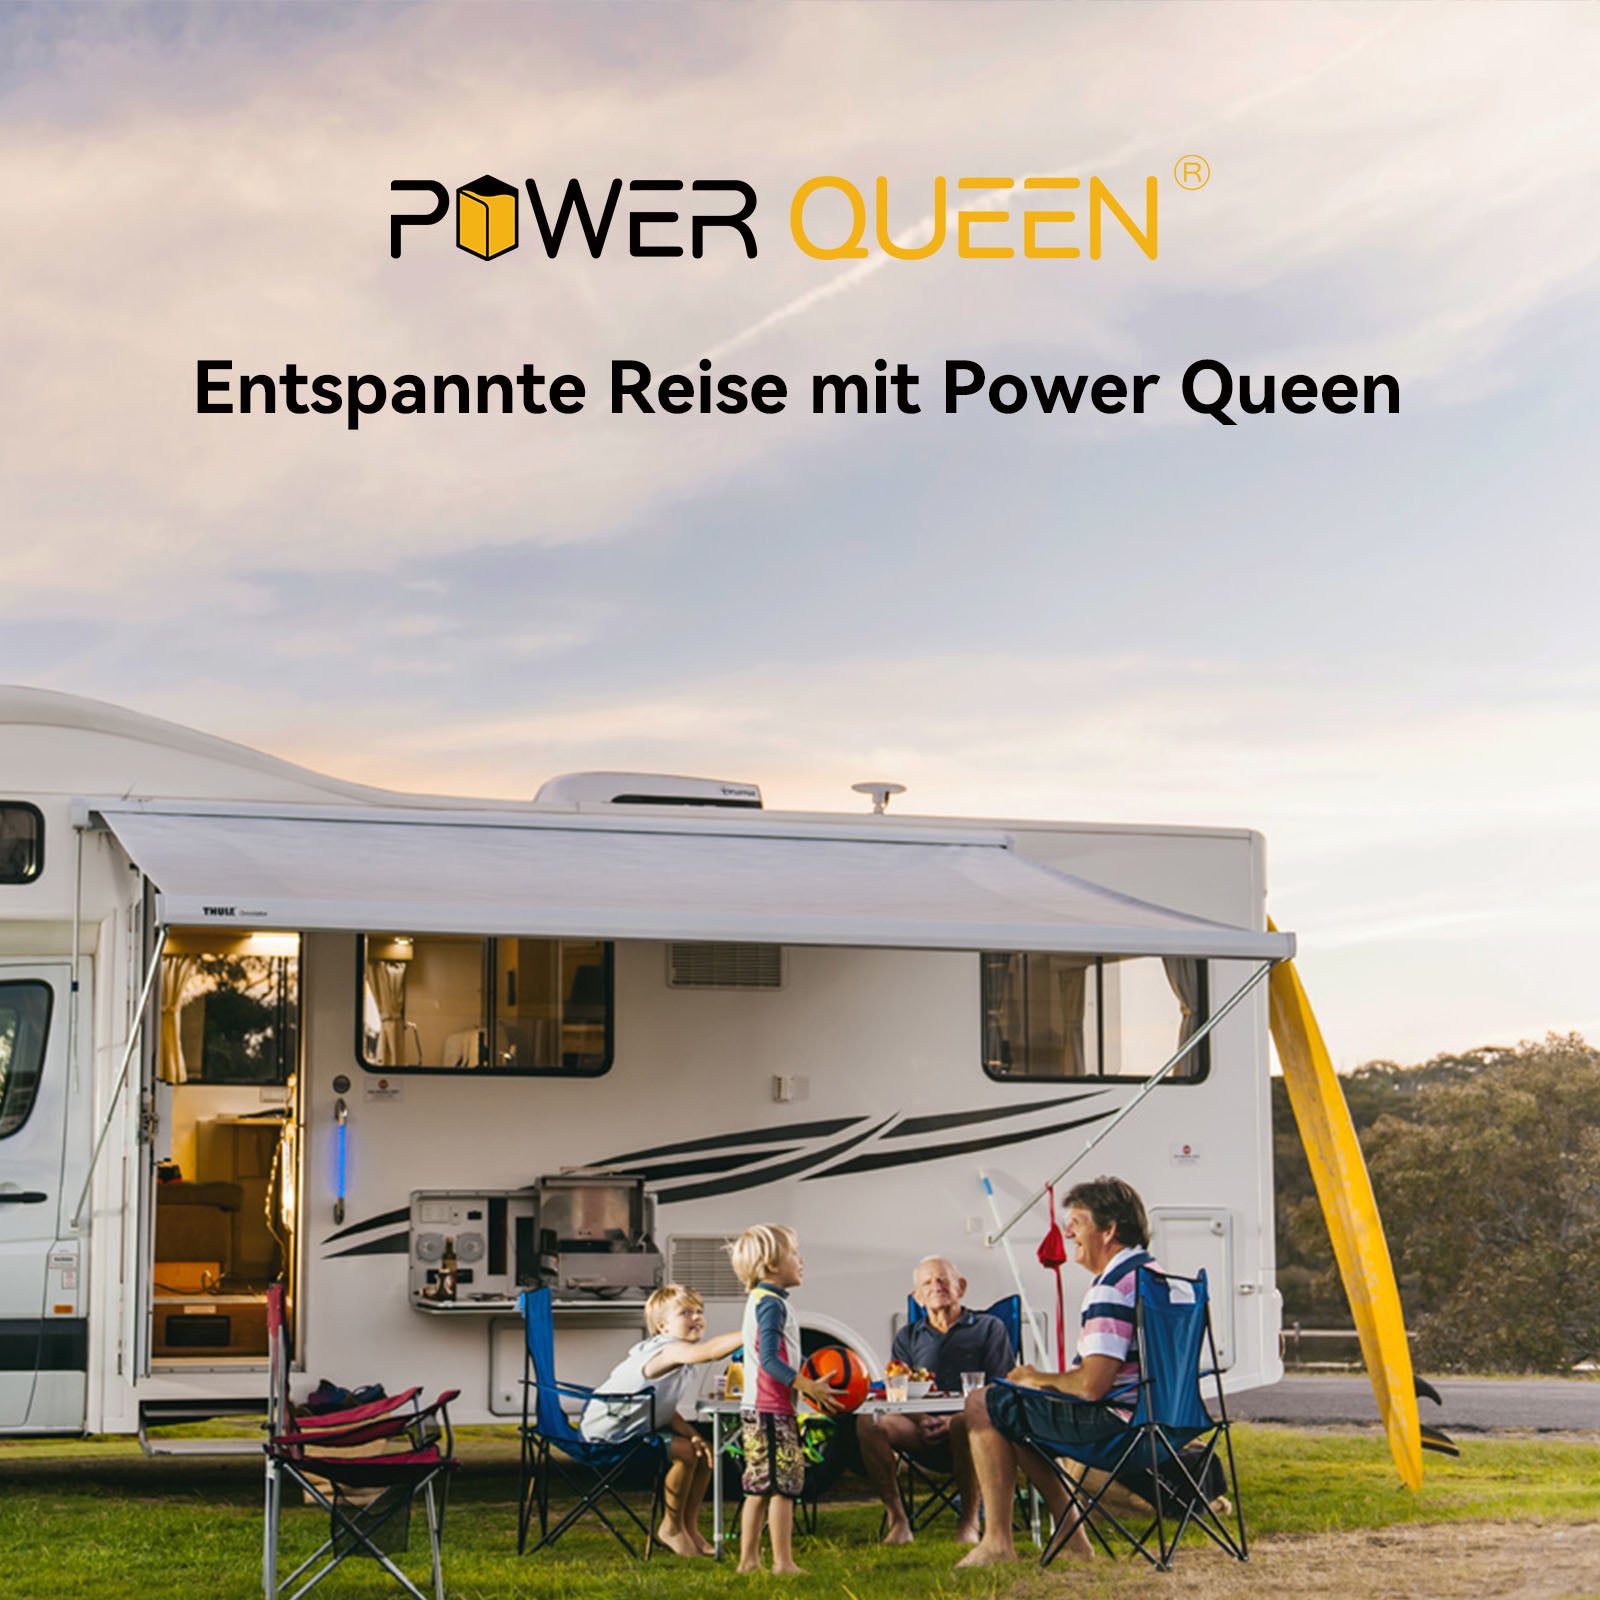 【0% Mwst.】Power Queen 48V 100Ah LiFePO4 Batterie, Integriertes 100A BMS